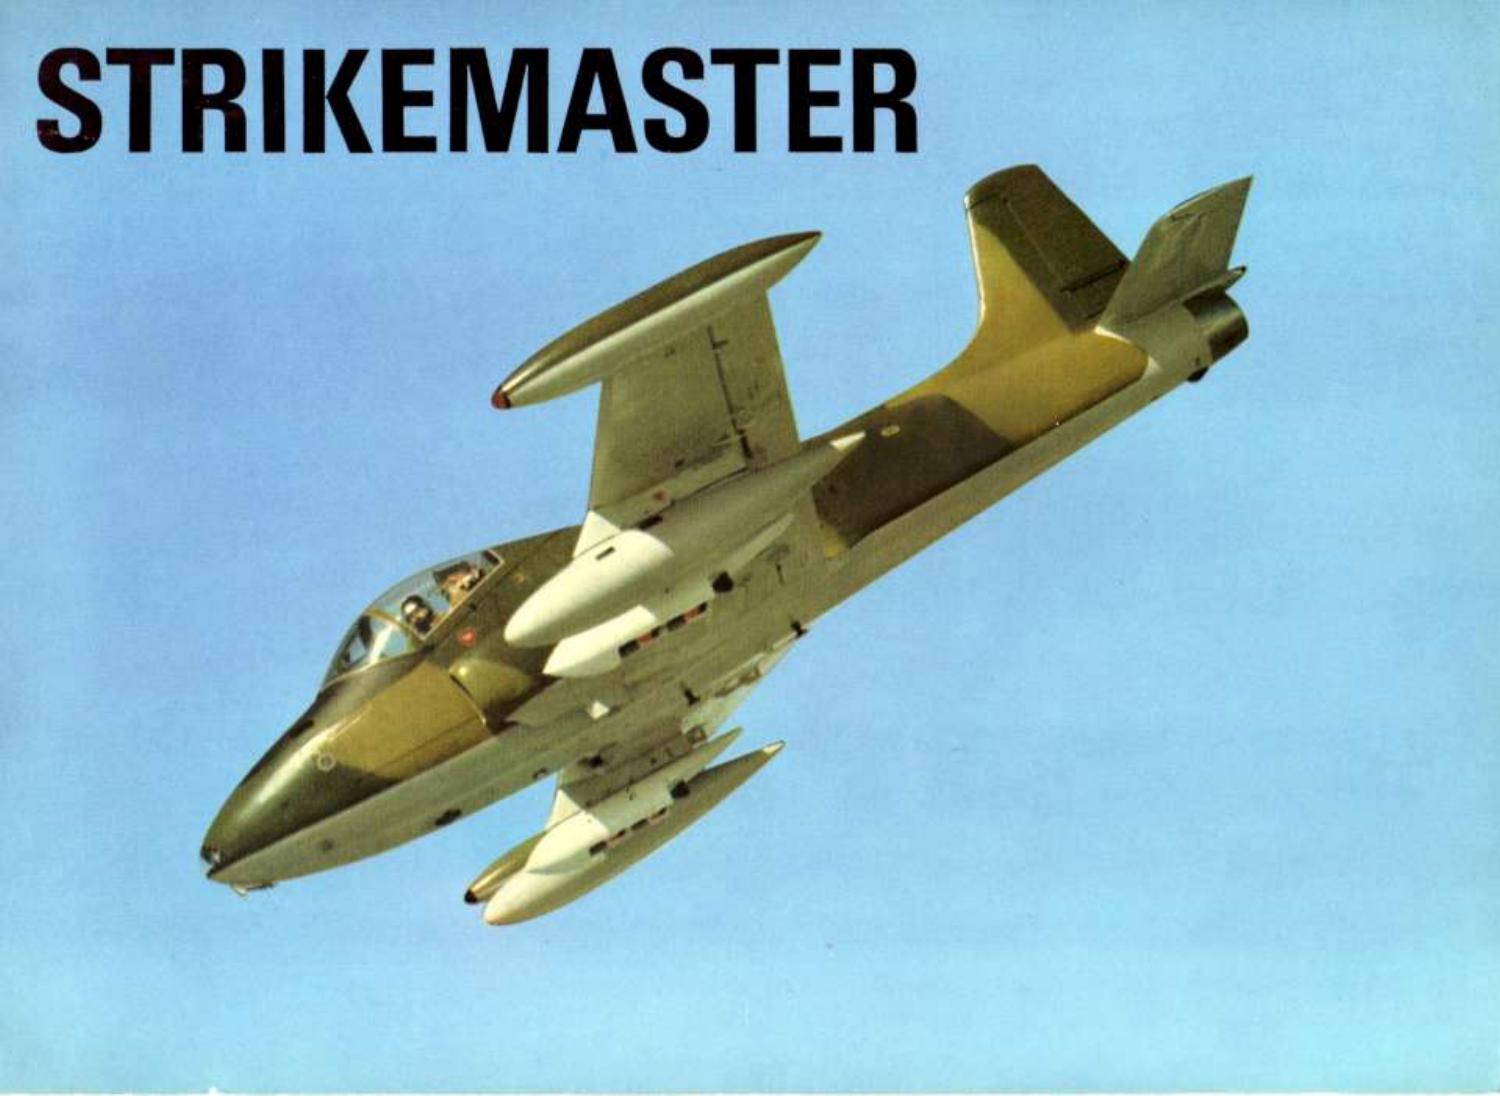 BAC-167 Strikemaster Brochure.pdf